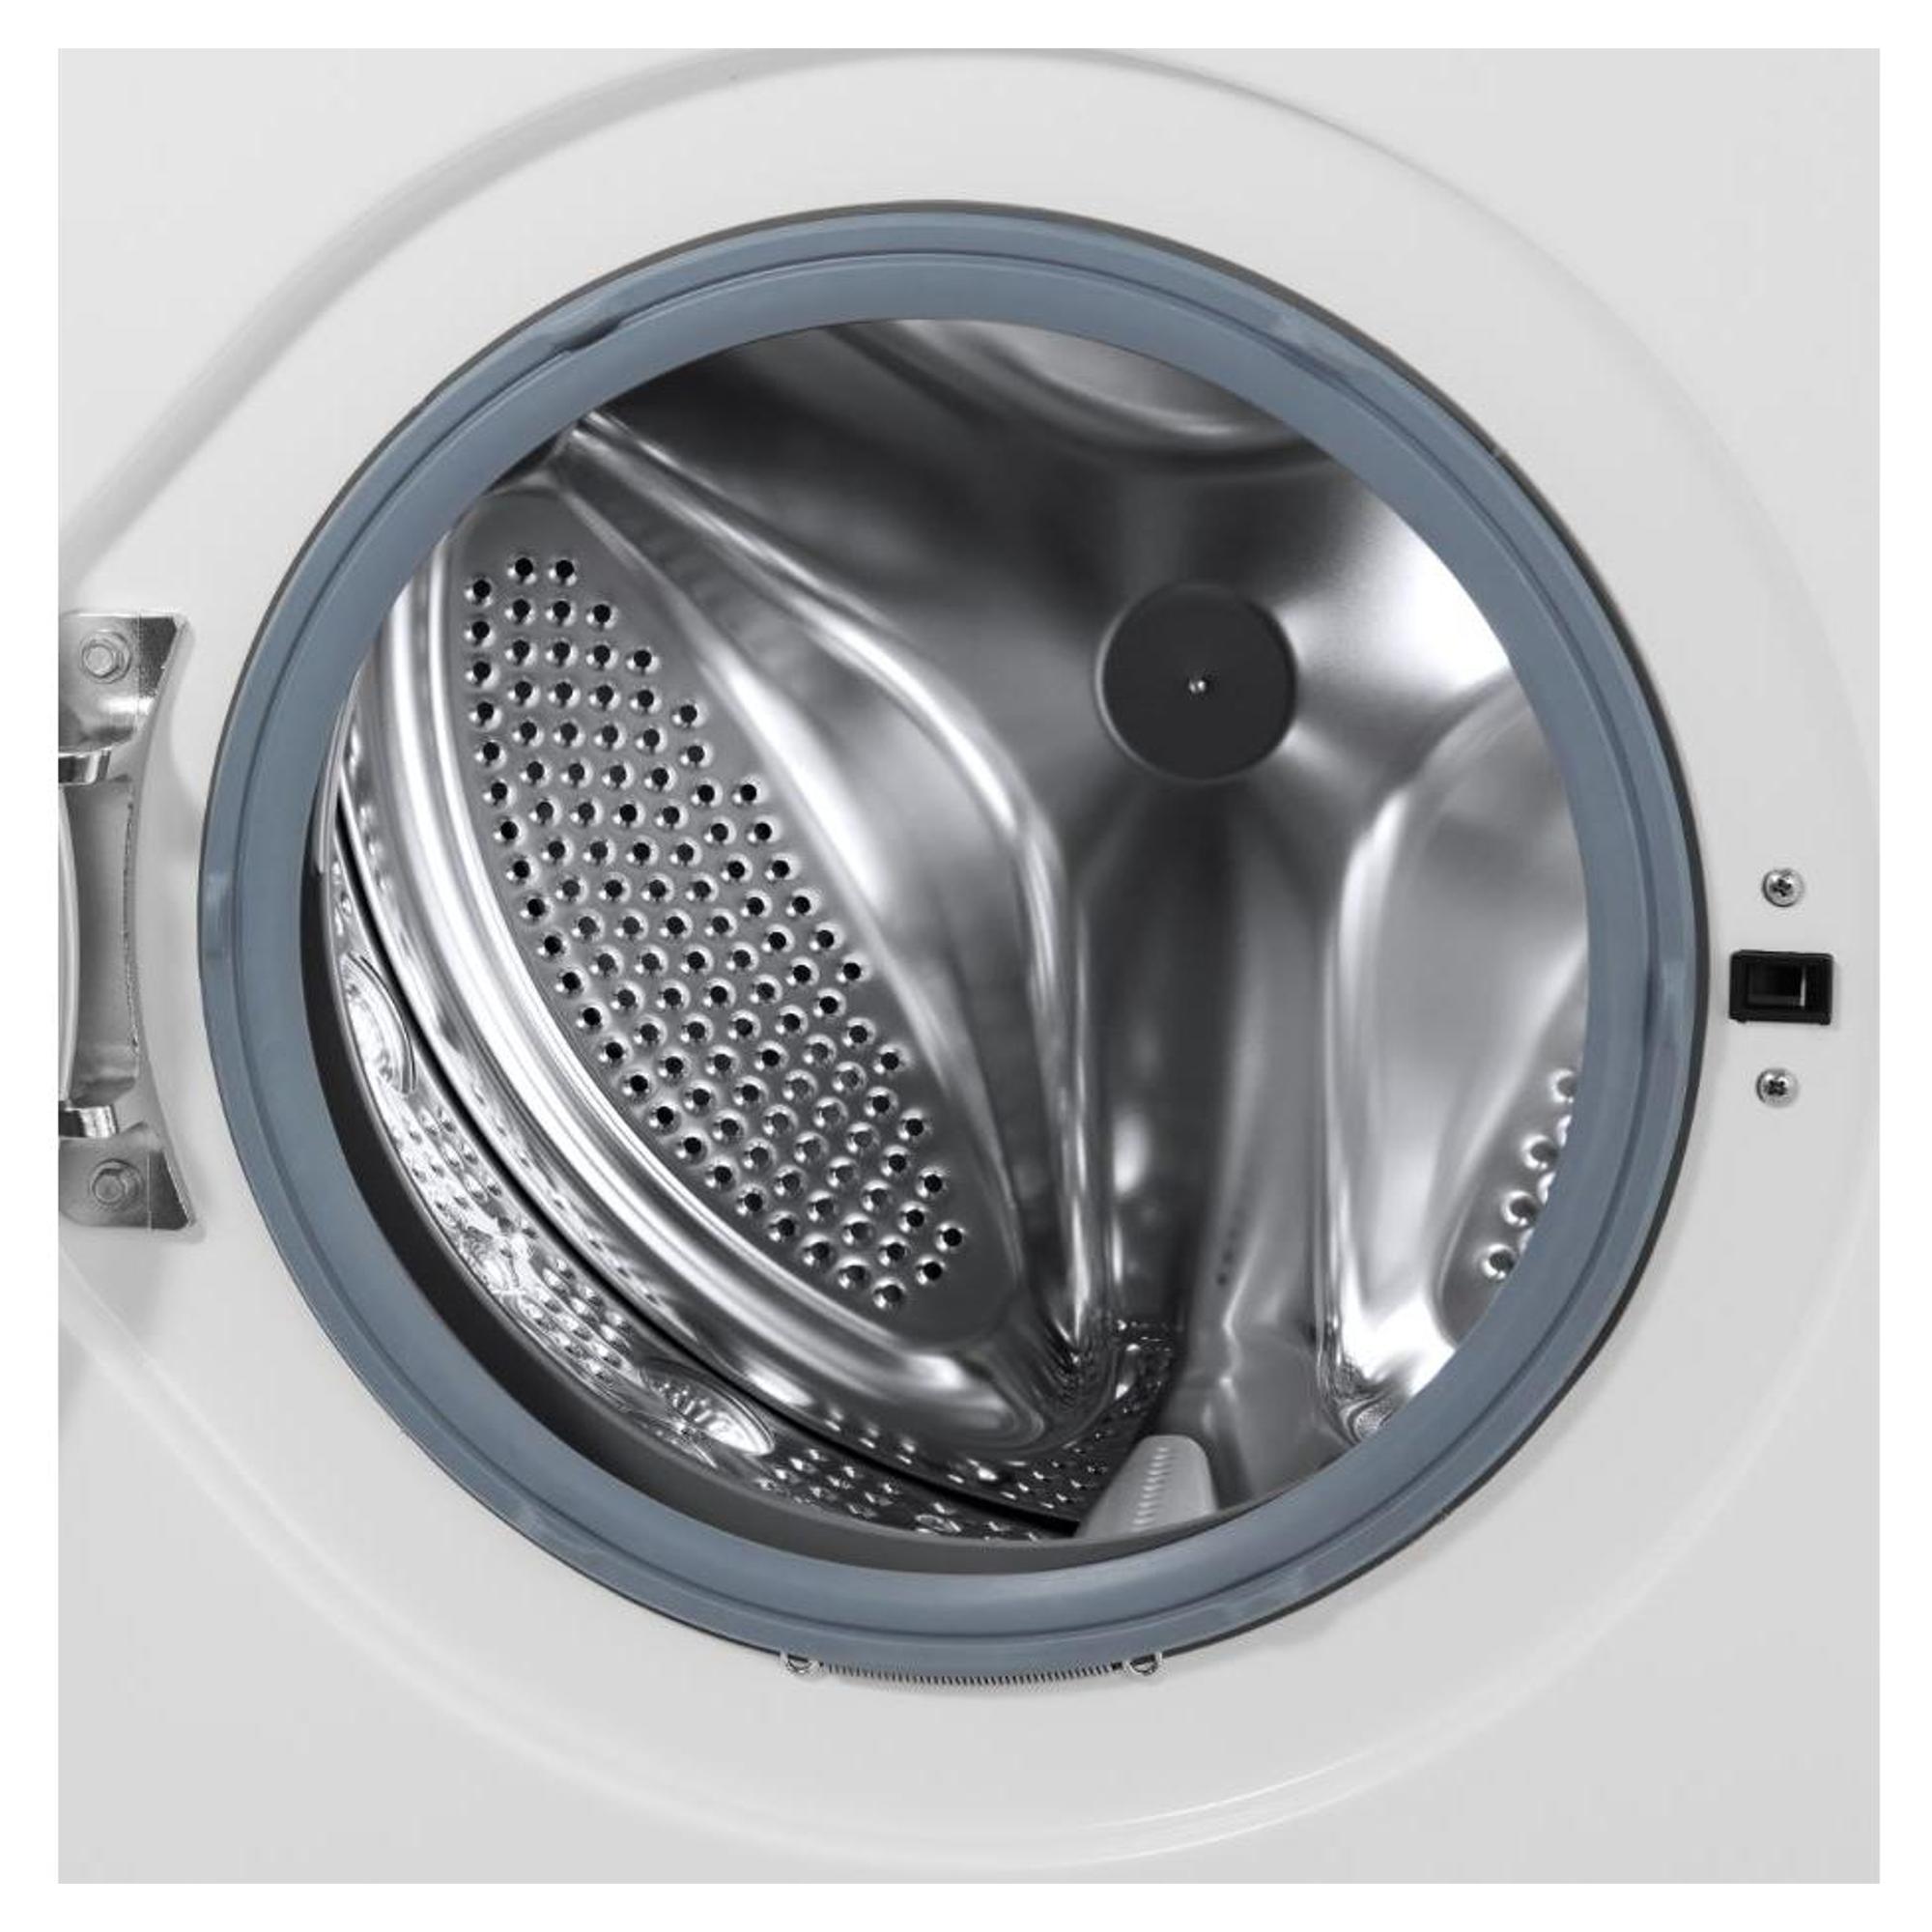 LG 8kg Washing Machine in White